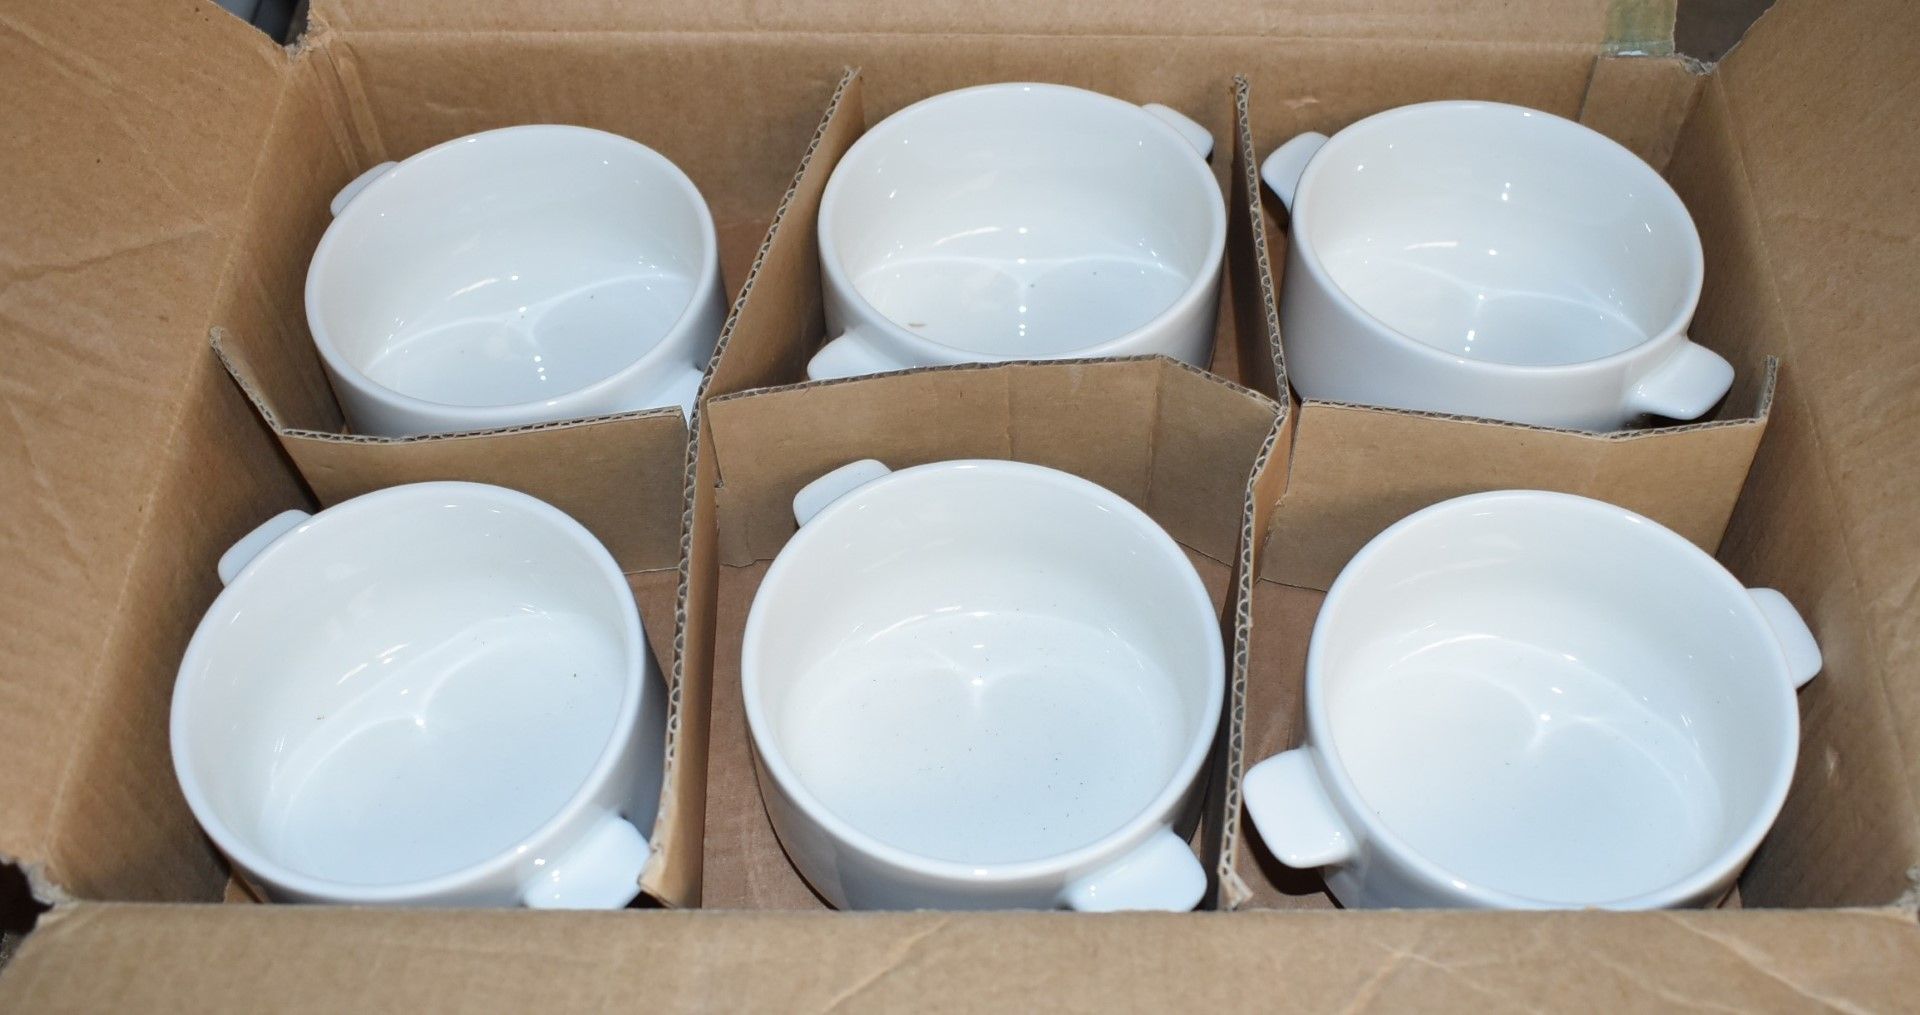 12 x RAK Porcelain Banquet 30cl Ivory Porcelain Lugged Soup Bowls With Handles - Type: BACS02 - - Image 4 of 6